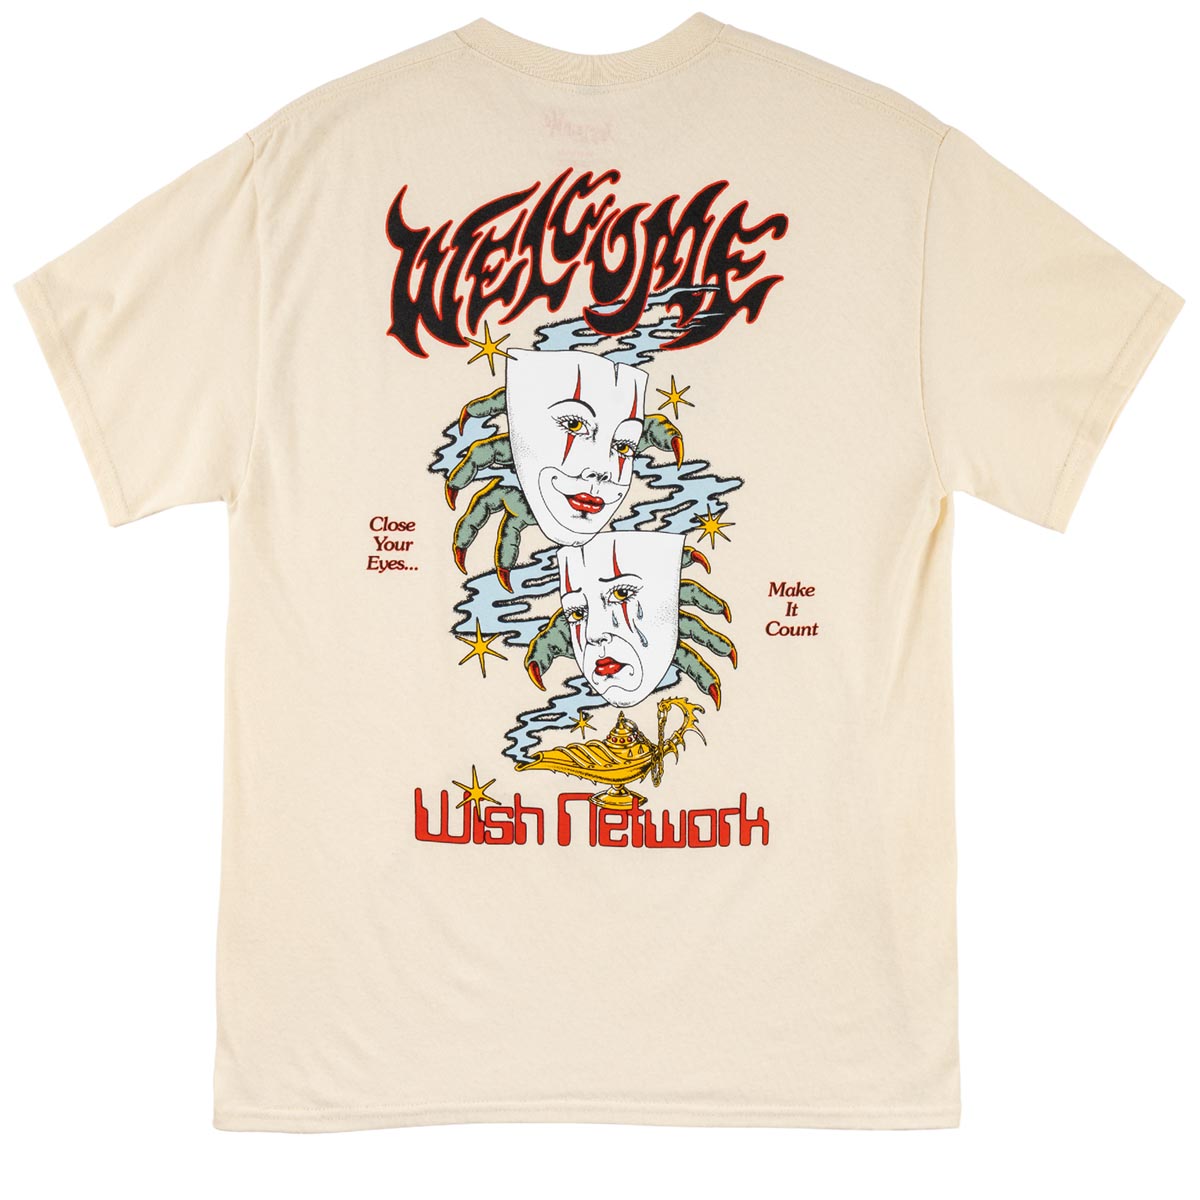 Welcome Wish T-Shirt - Bone image 1